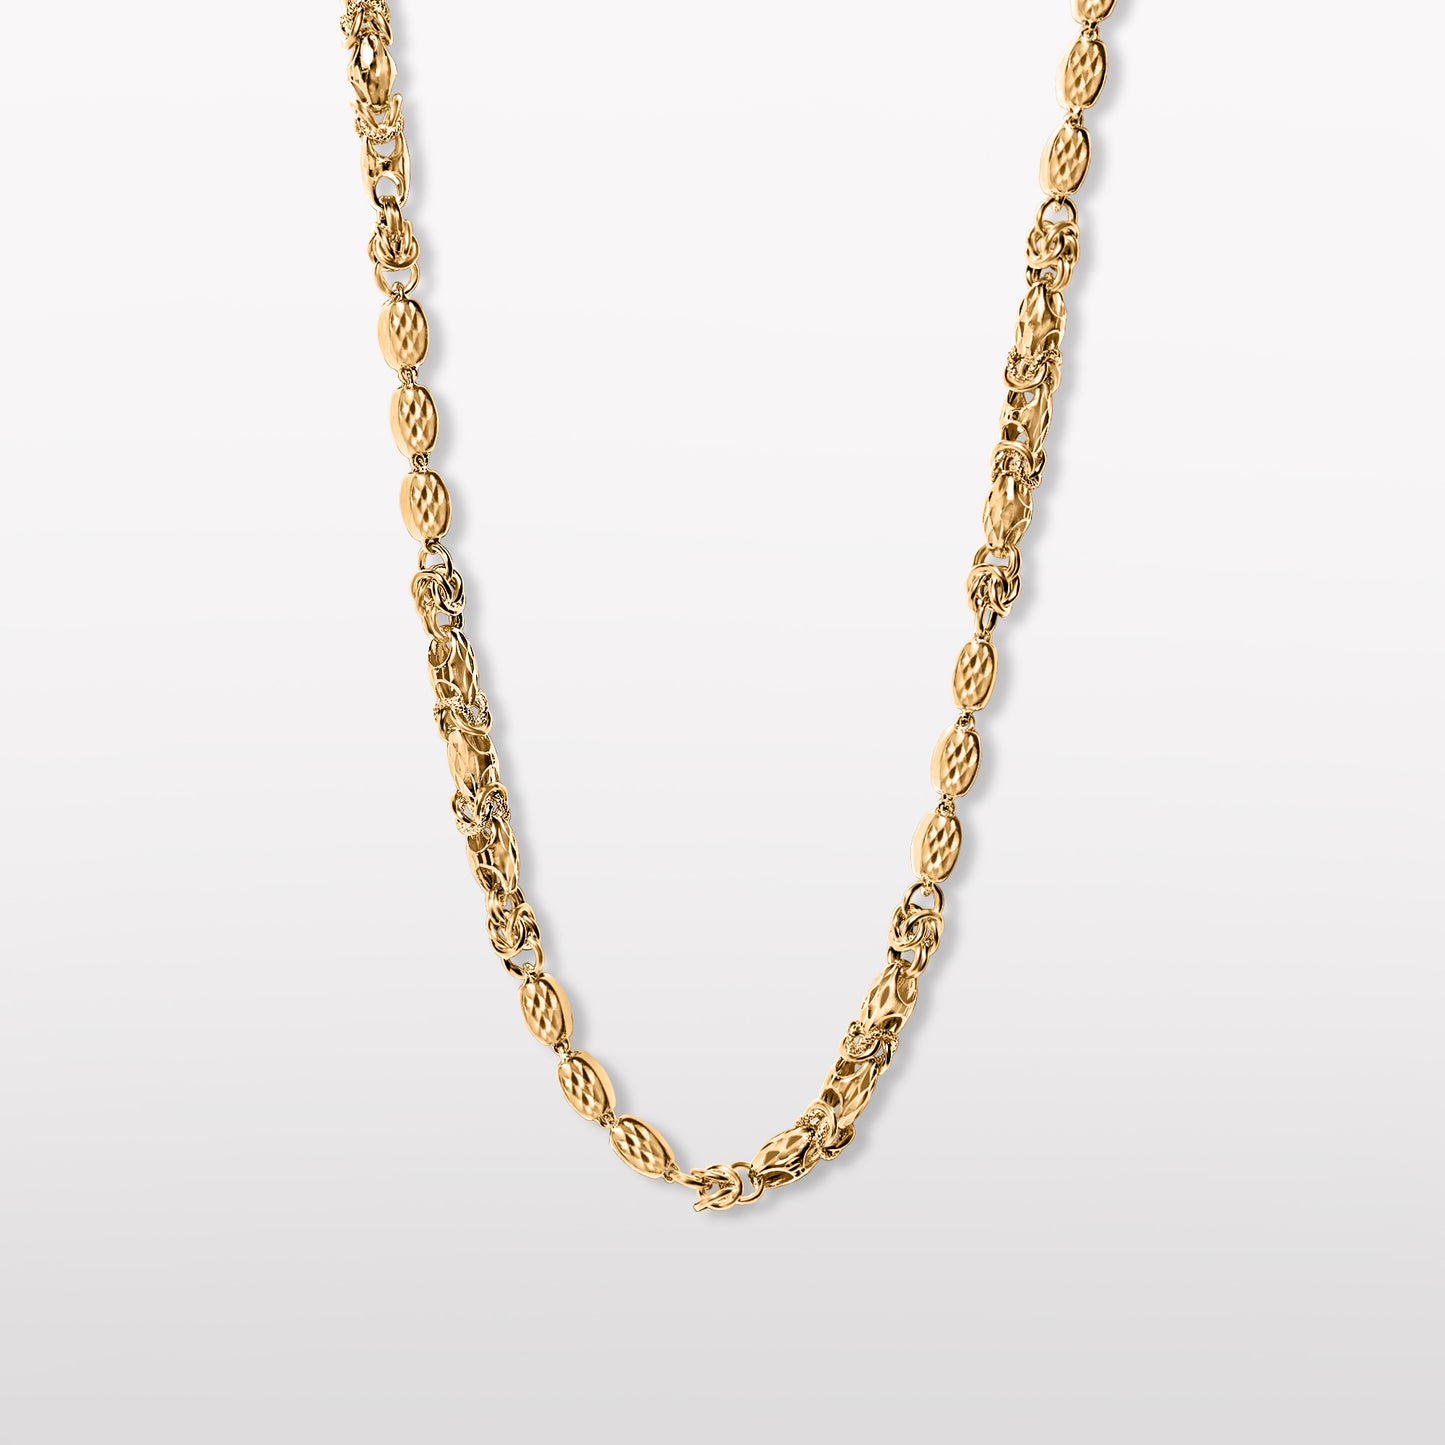 Men's 22k gold Byzantine hollow link chain 22 inch